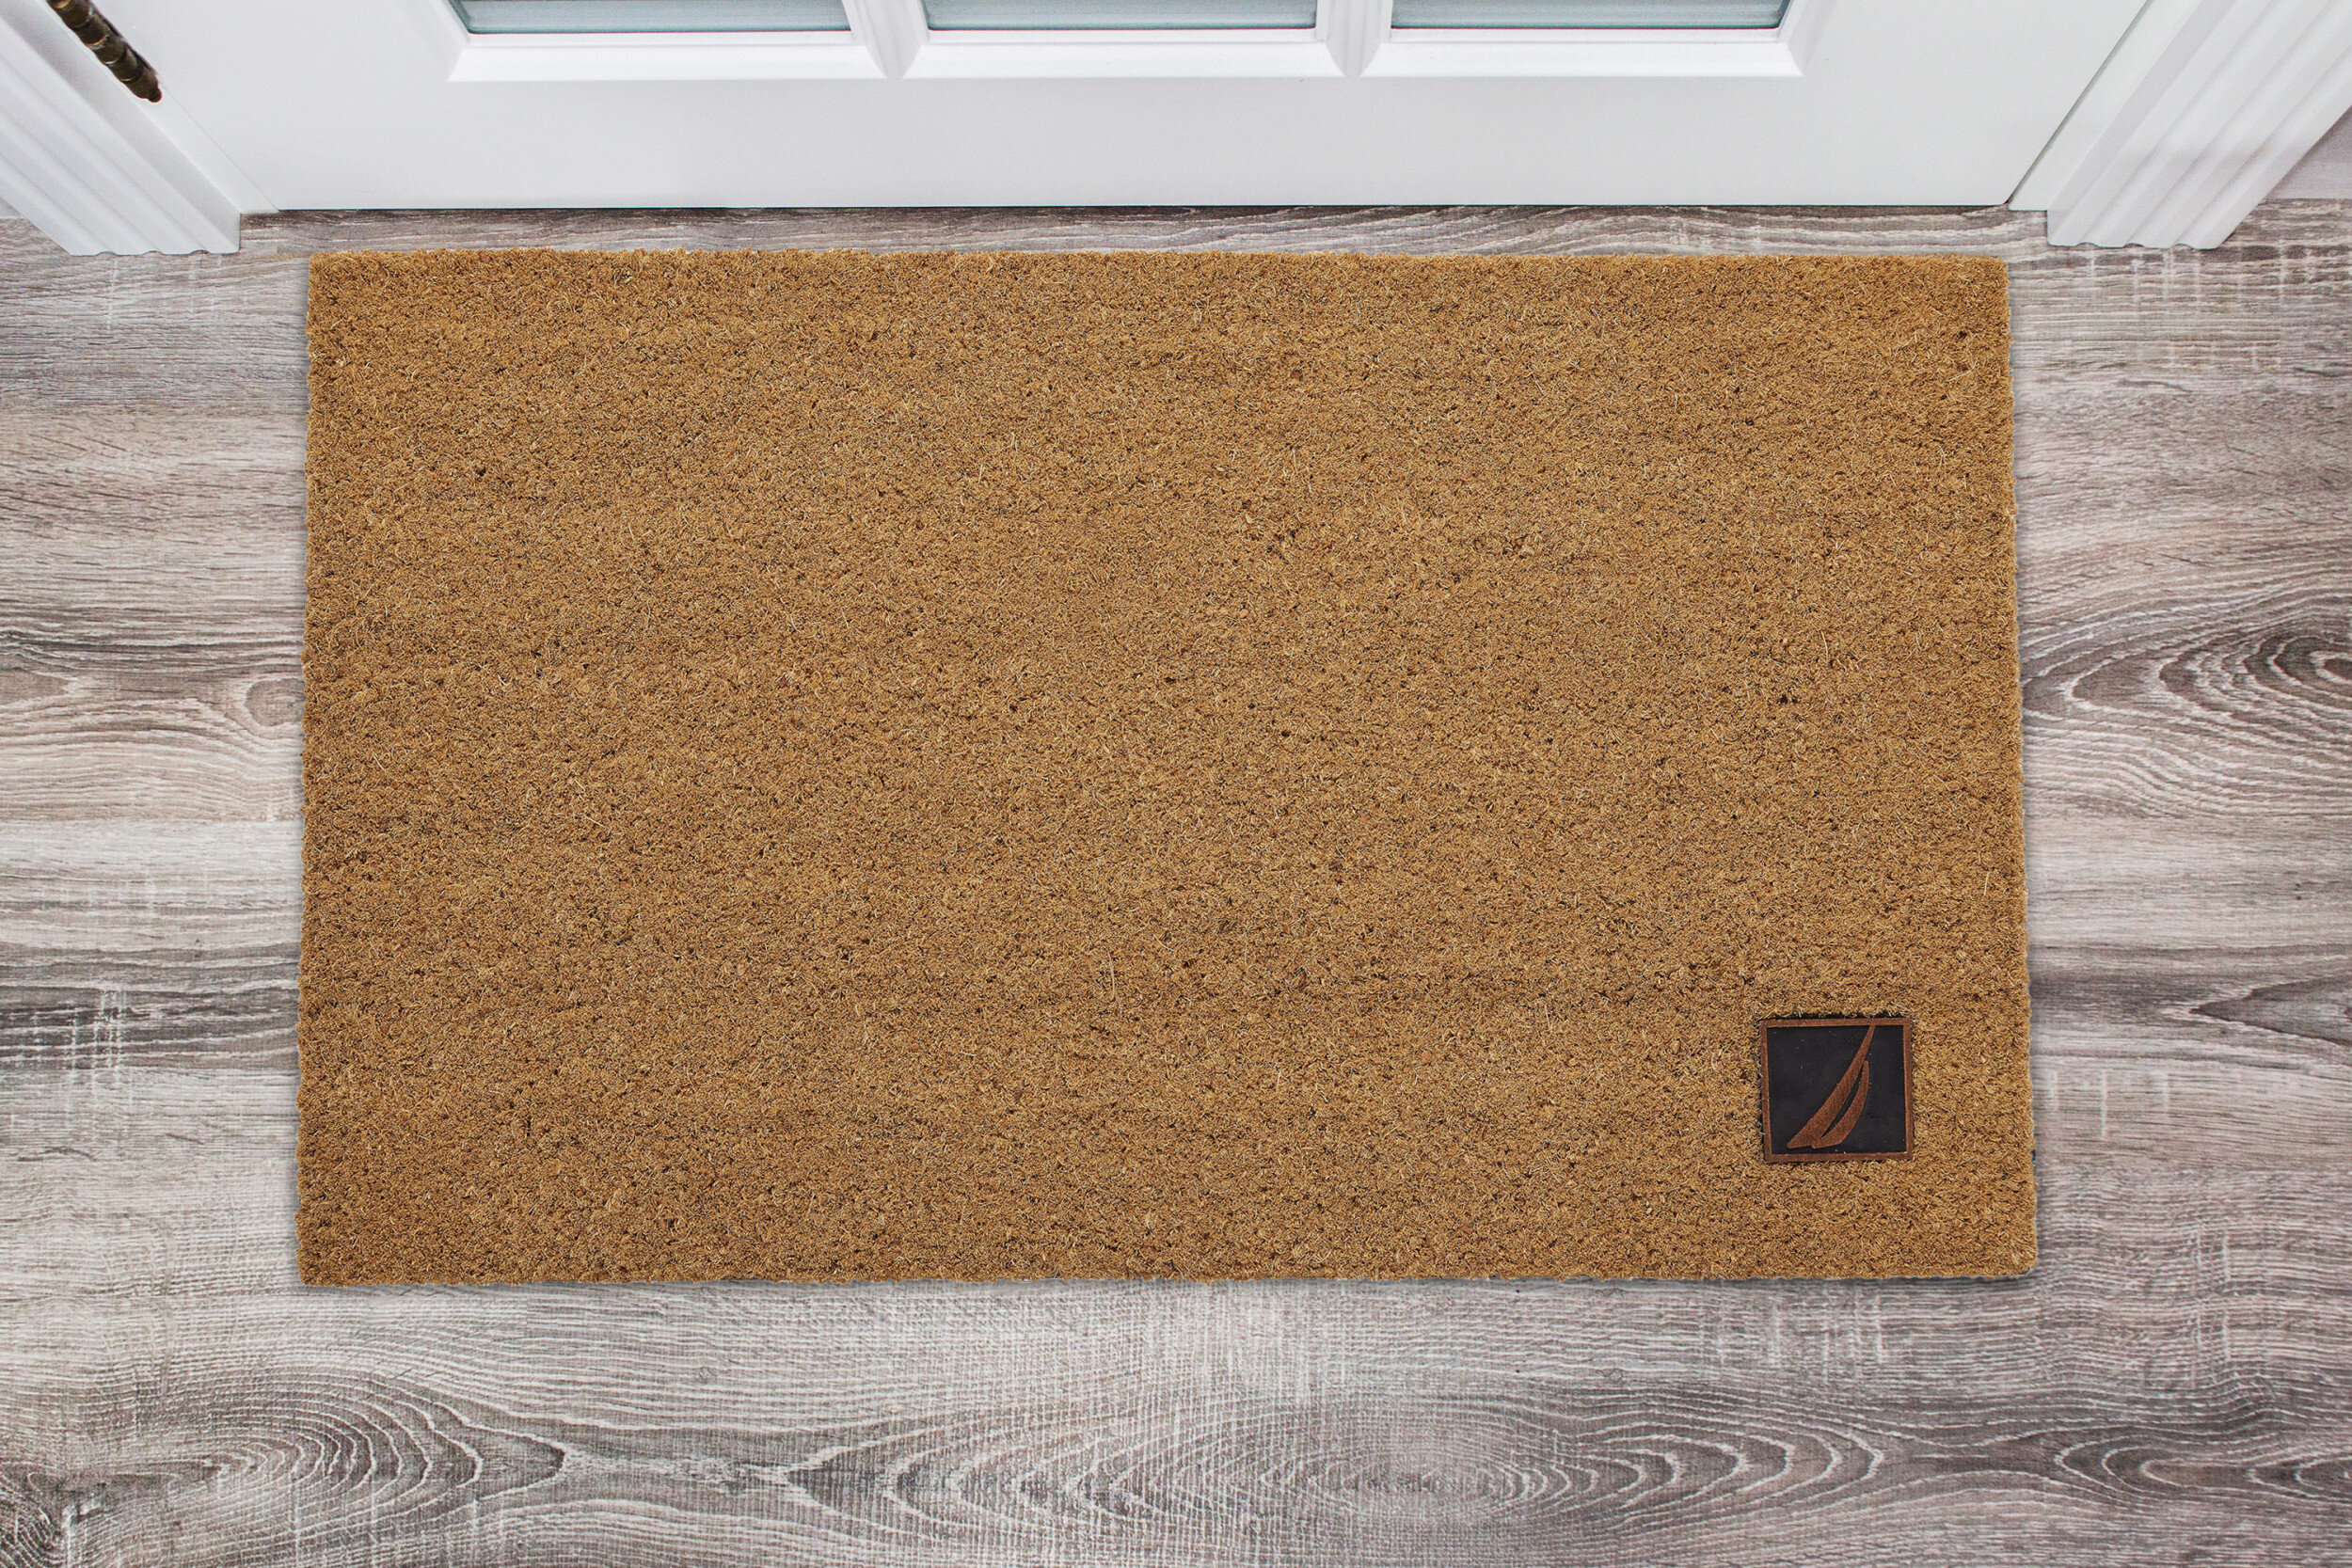  Rubber-Cal Contemporary Welcome Home Mats Natural Coir  Matting, 18 x 30-Inch : Doormat : Patio, Lawn & Garden